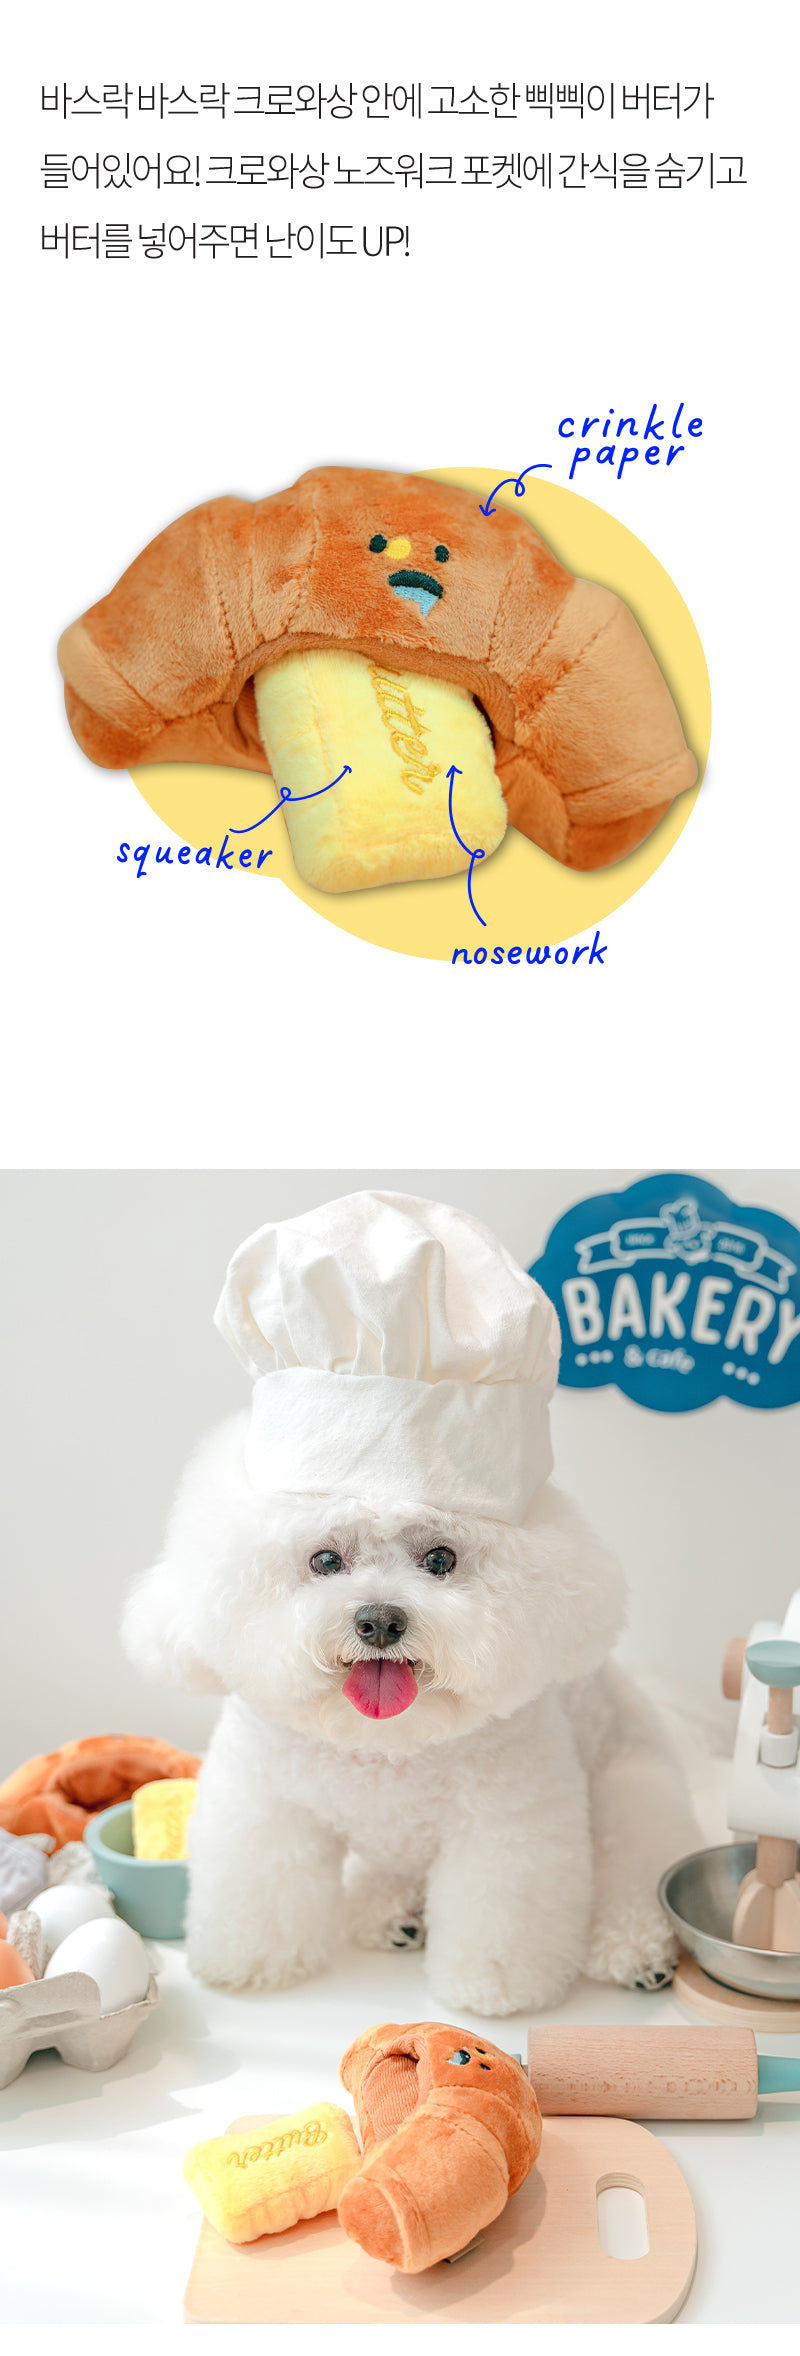 Biteme Croissants Nosework Toy 牛角包牛油藏食玩具